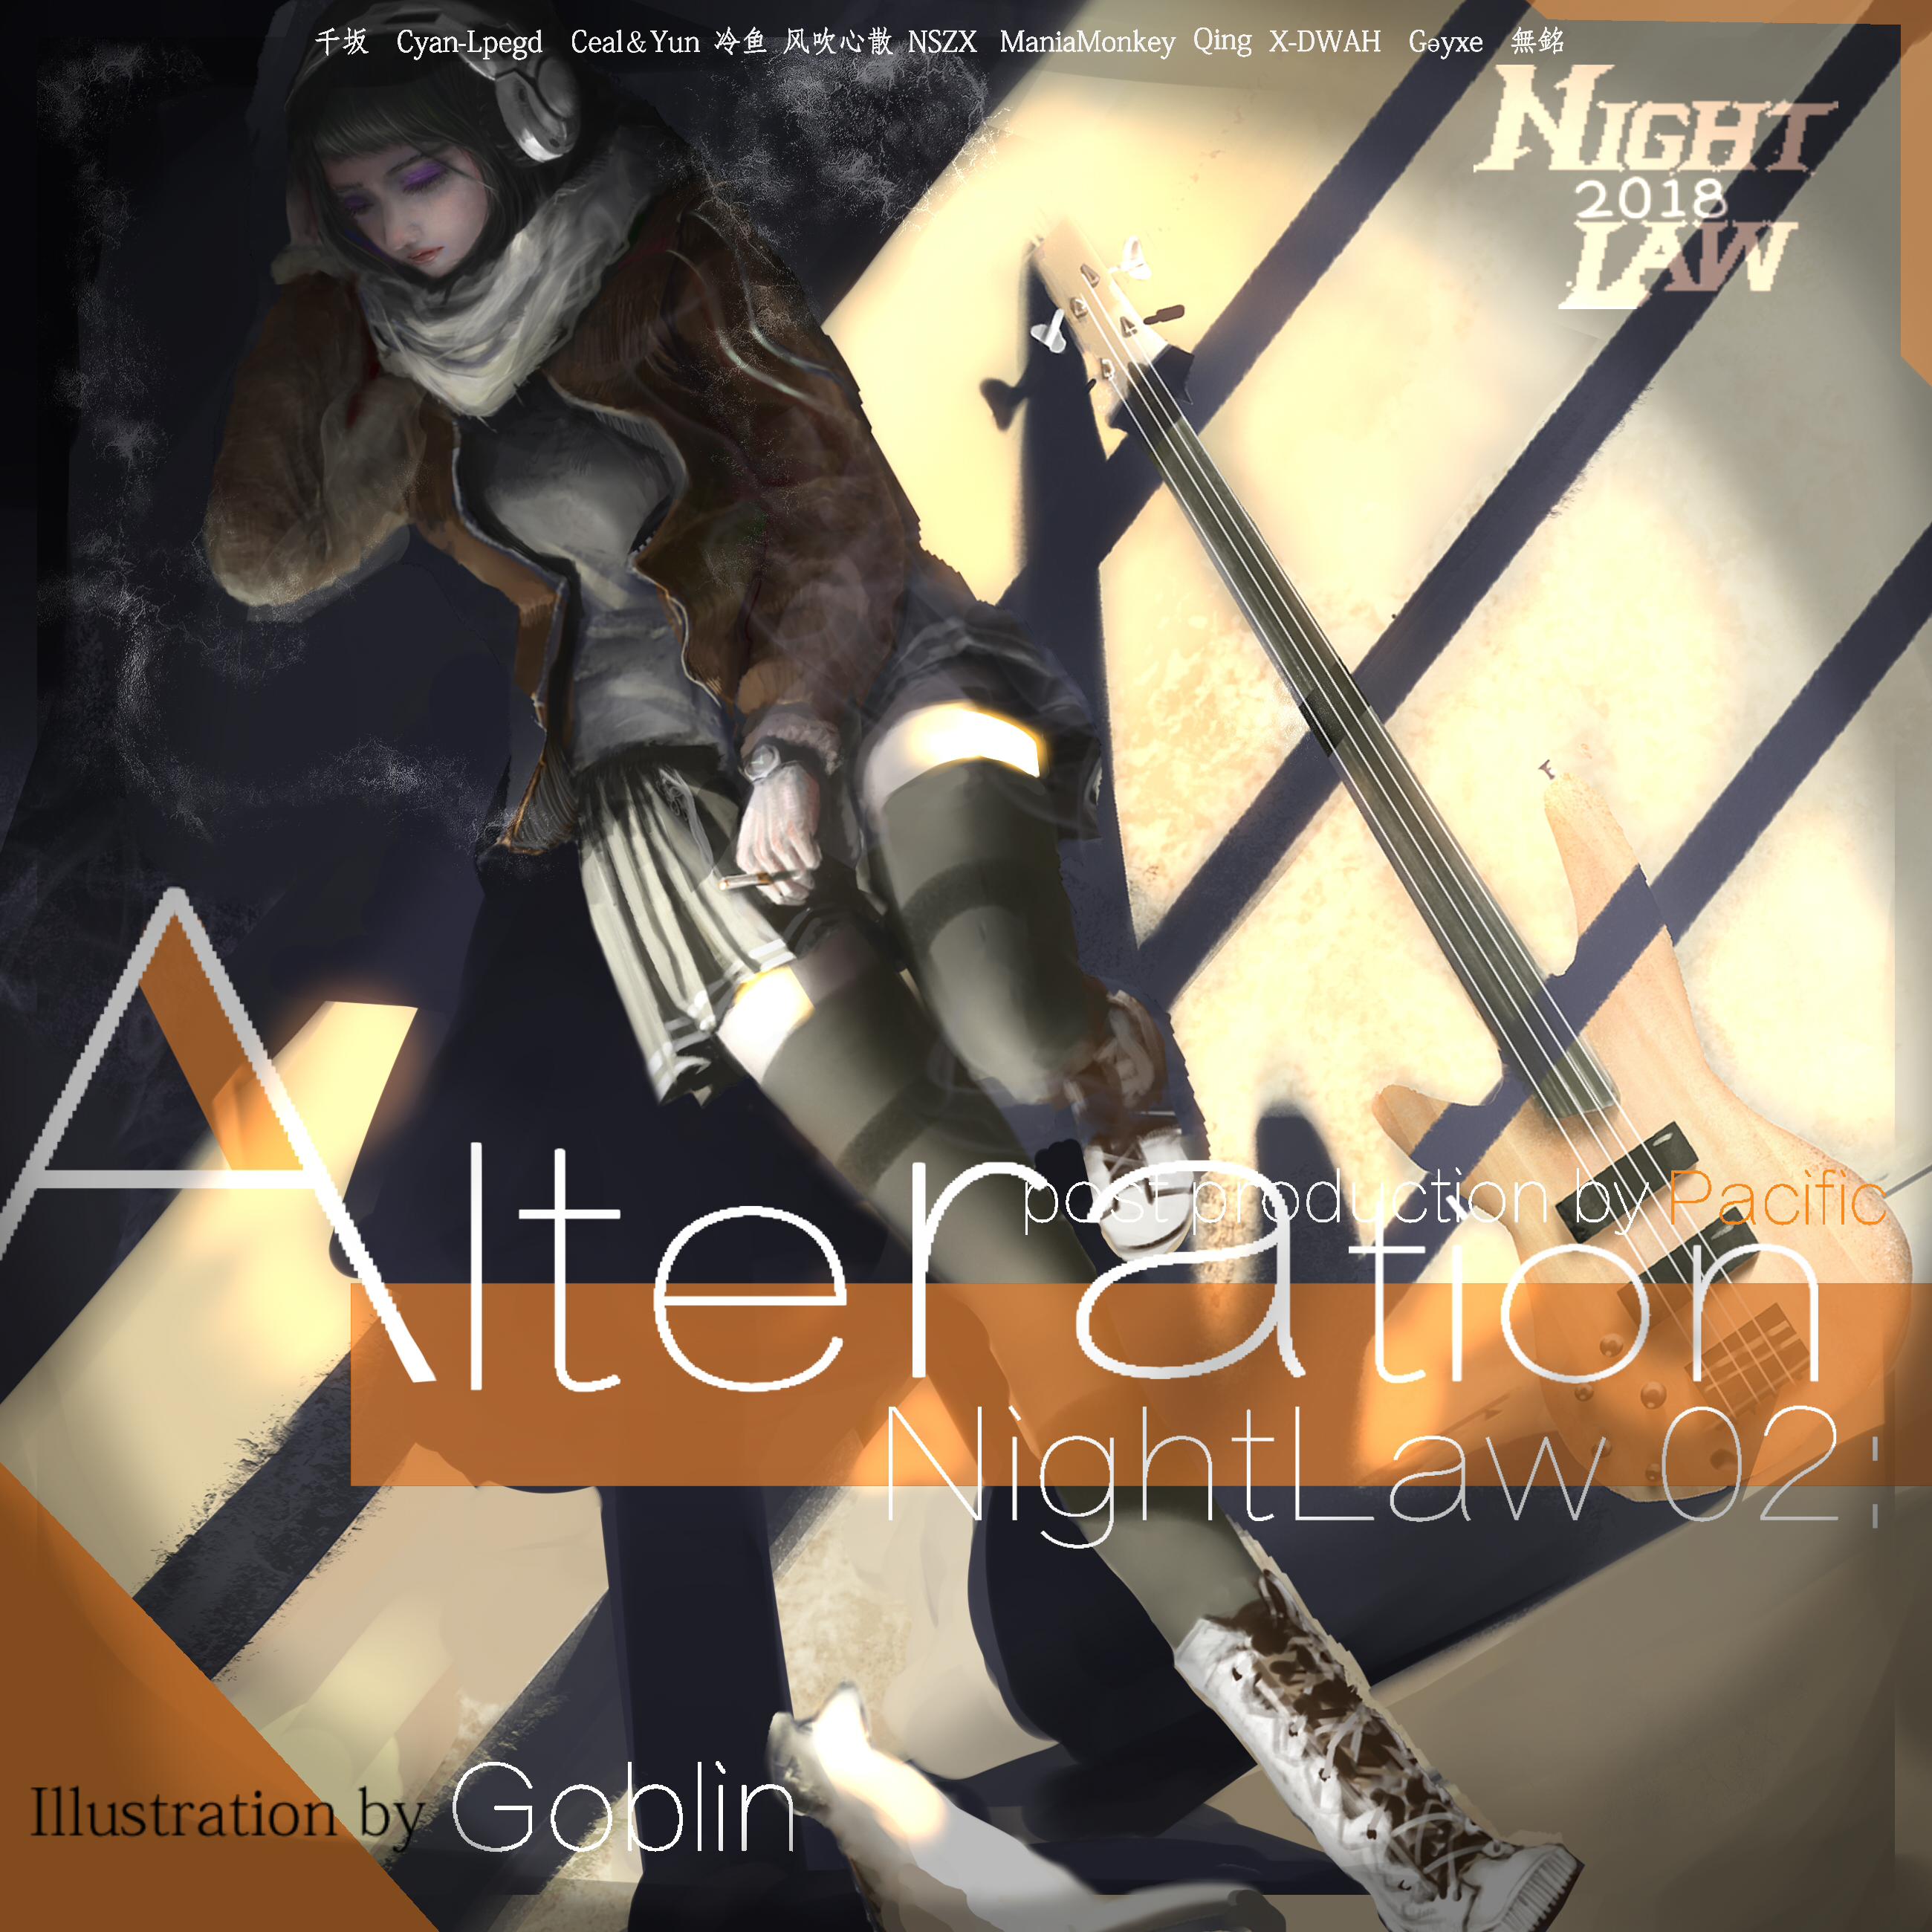 Night Law 02: Alteration